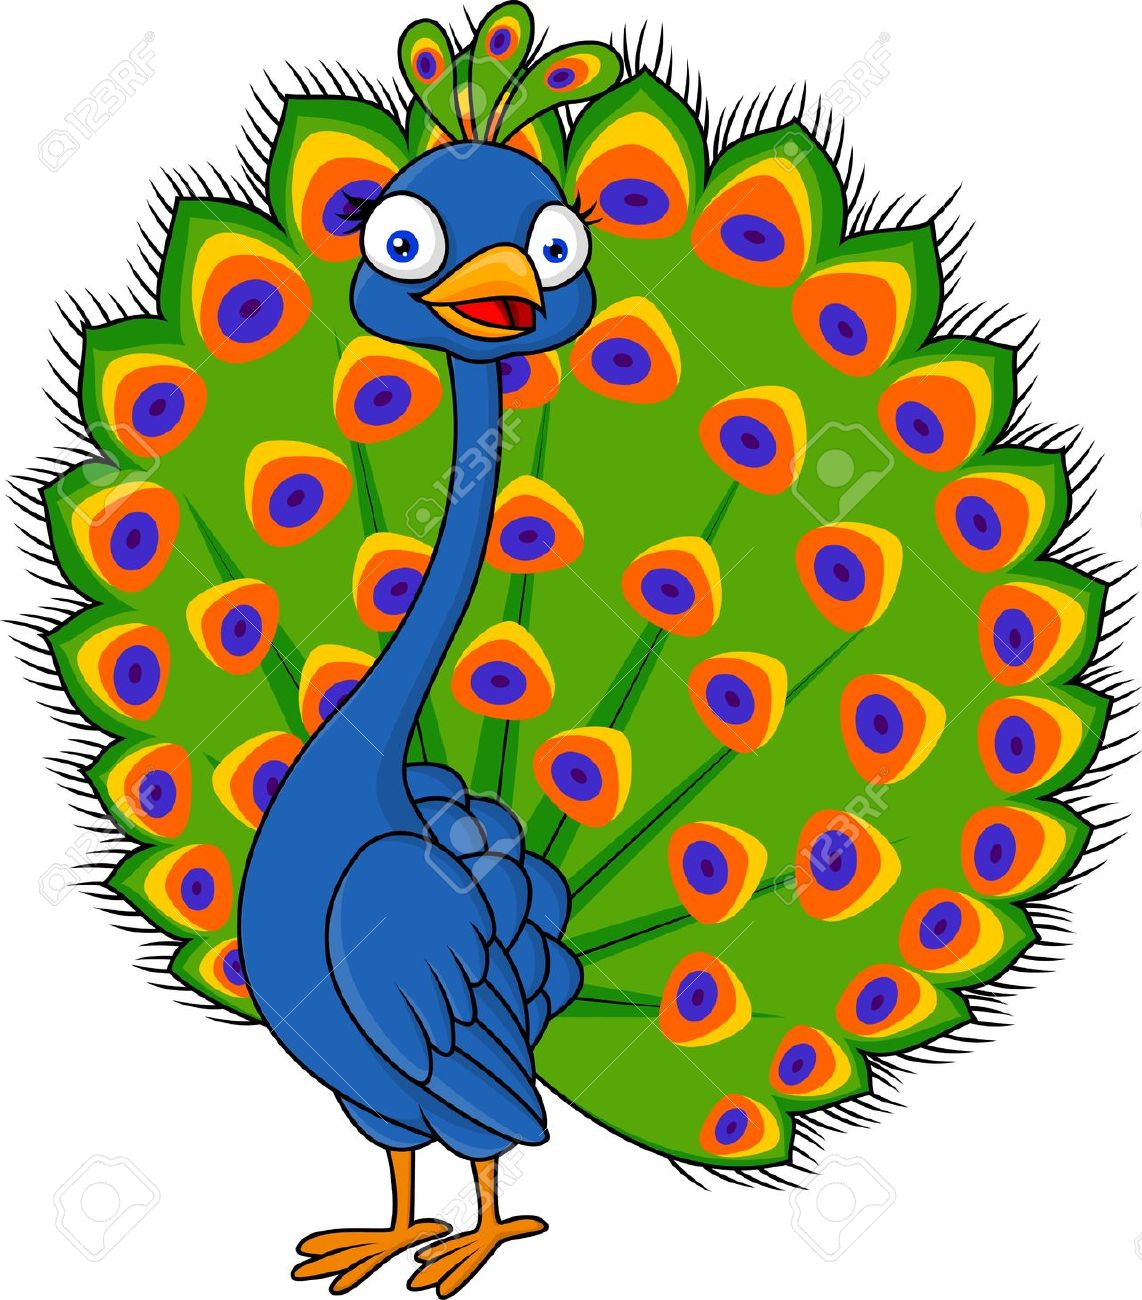 peacock: Cute peacock cartoon Illustration